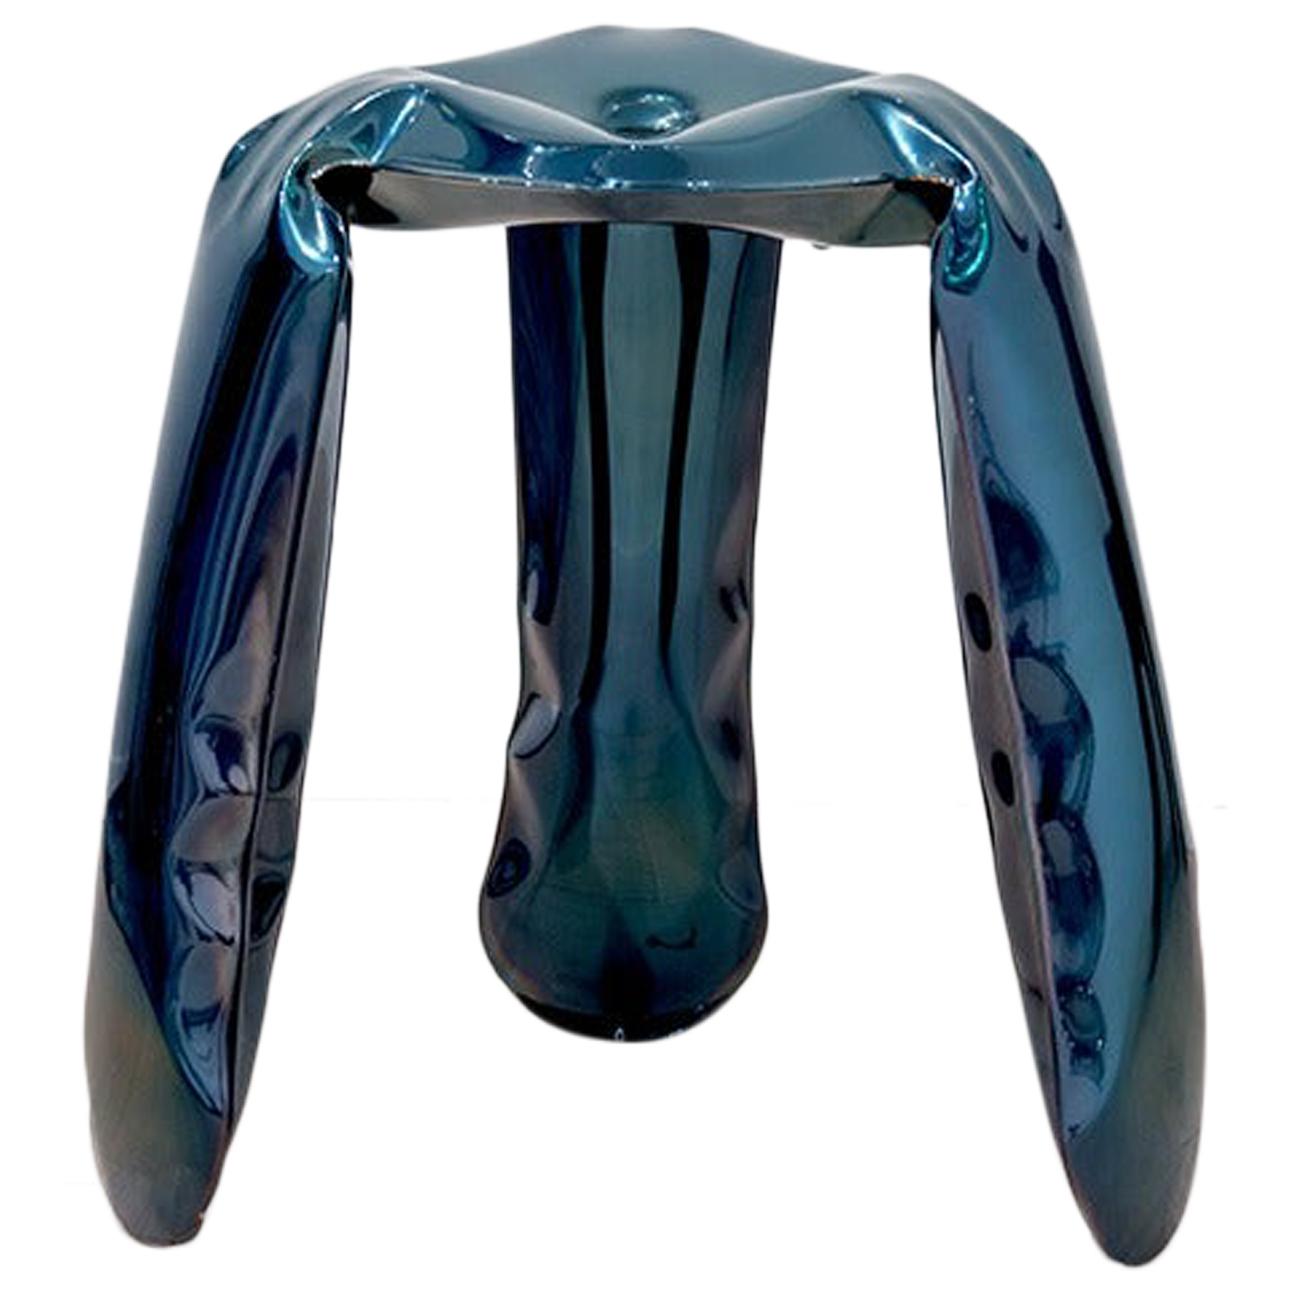 Plopp Stool by Zieta, Mini Size, Cosmic Blue Finish For Sale